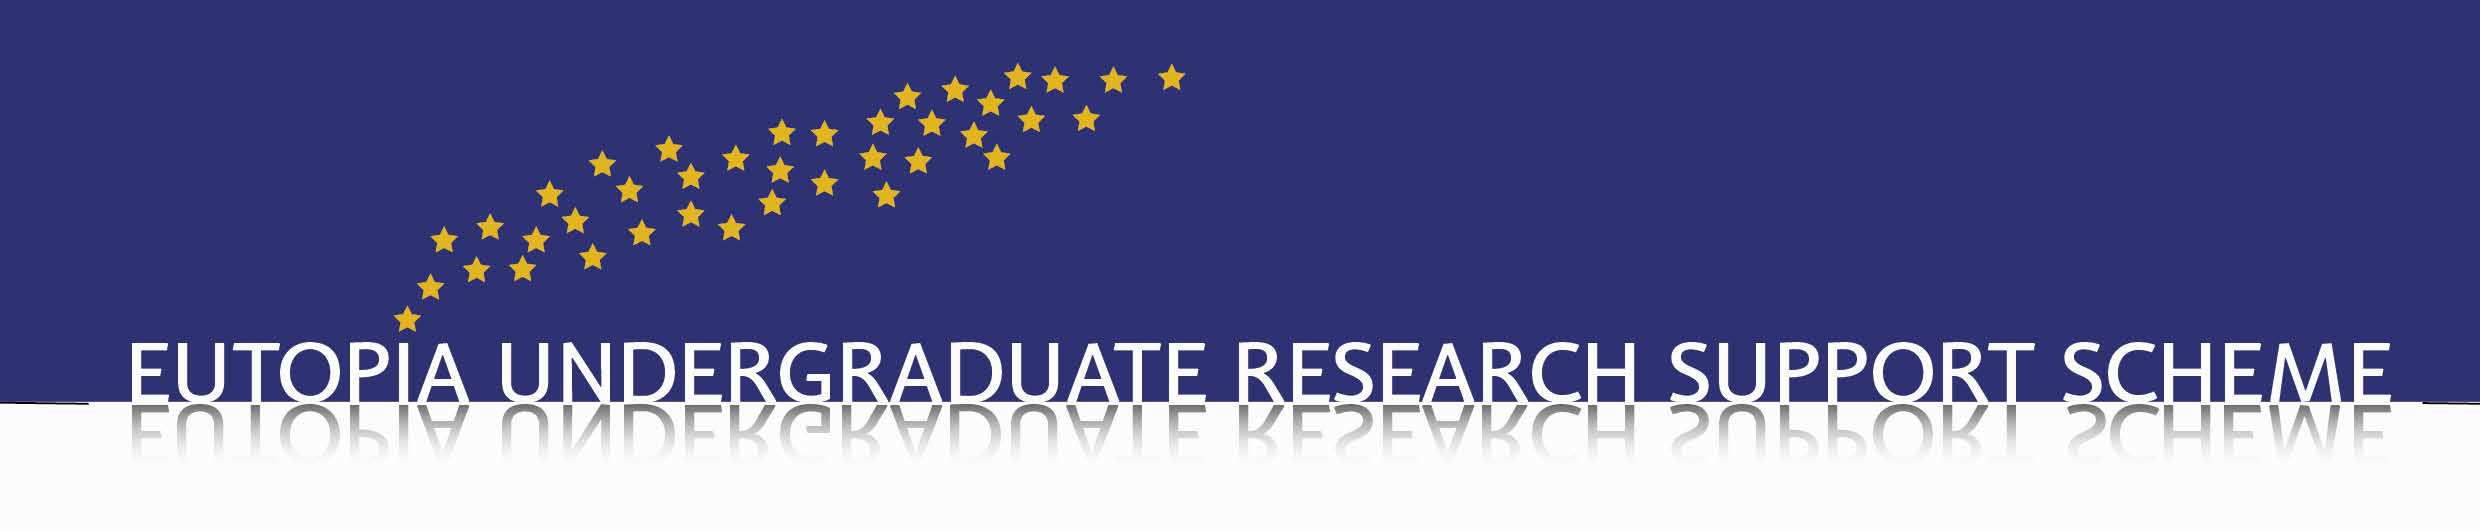 undergraduate research support scheme